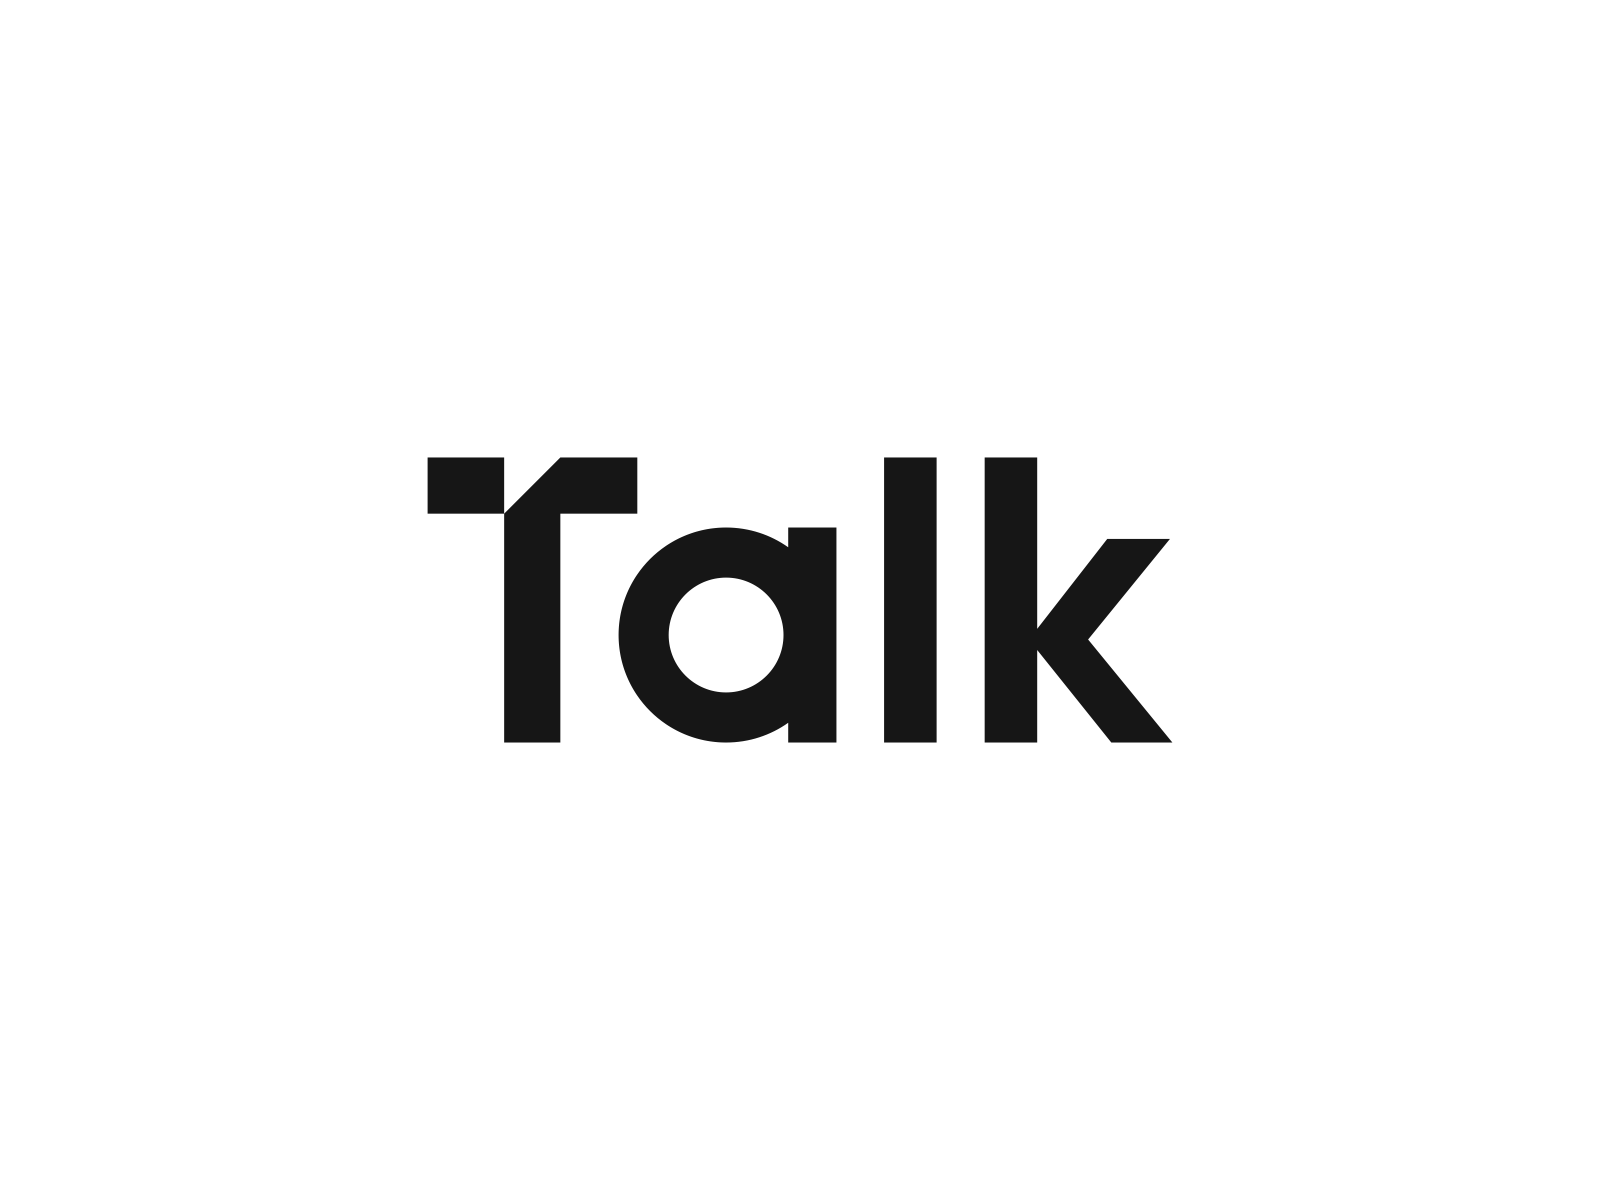 Talk logo concept by adrikni_std on Dribbble